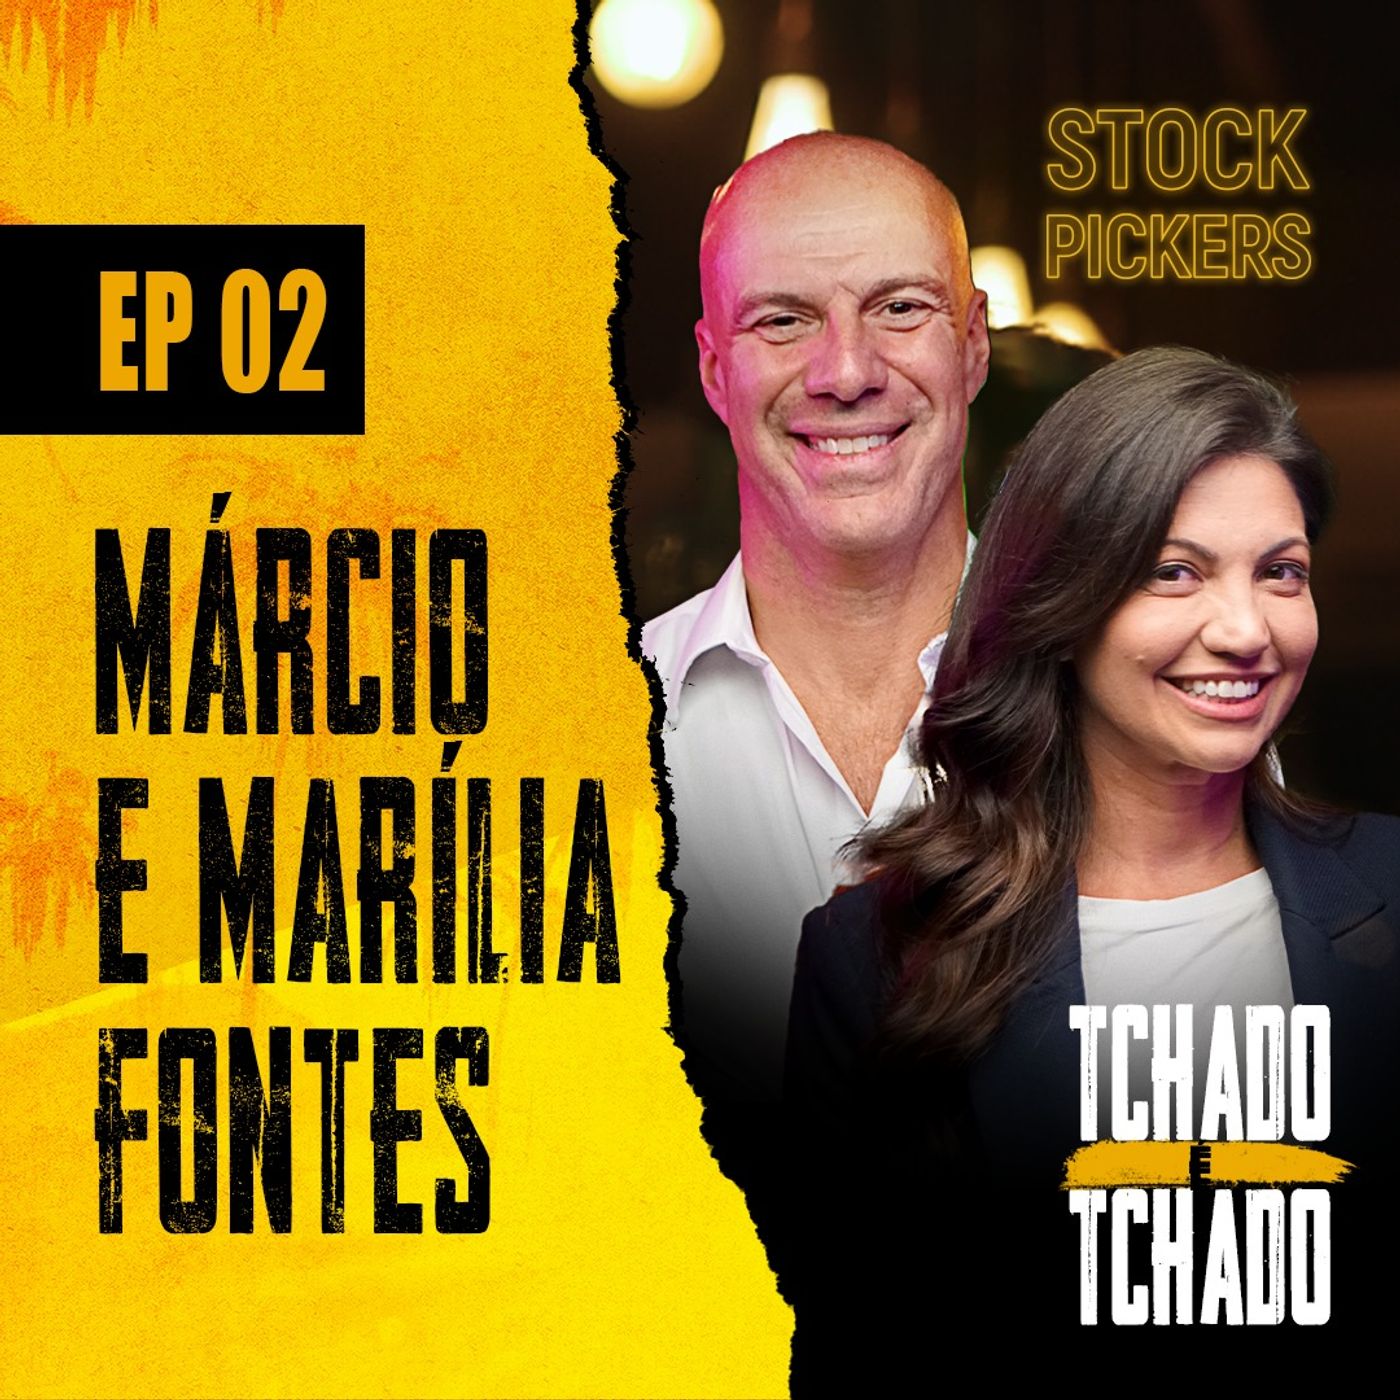 Casados com o mercado, trader de lotes e macroeconomia - o amor de Marcio e Marilia Fontes